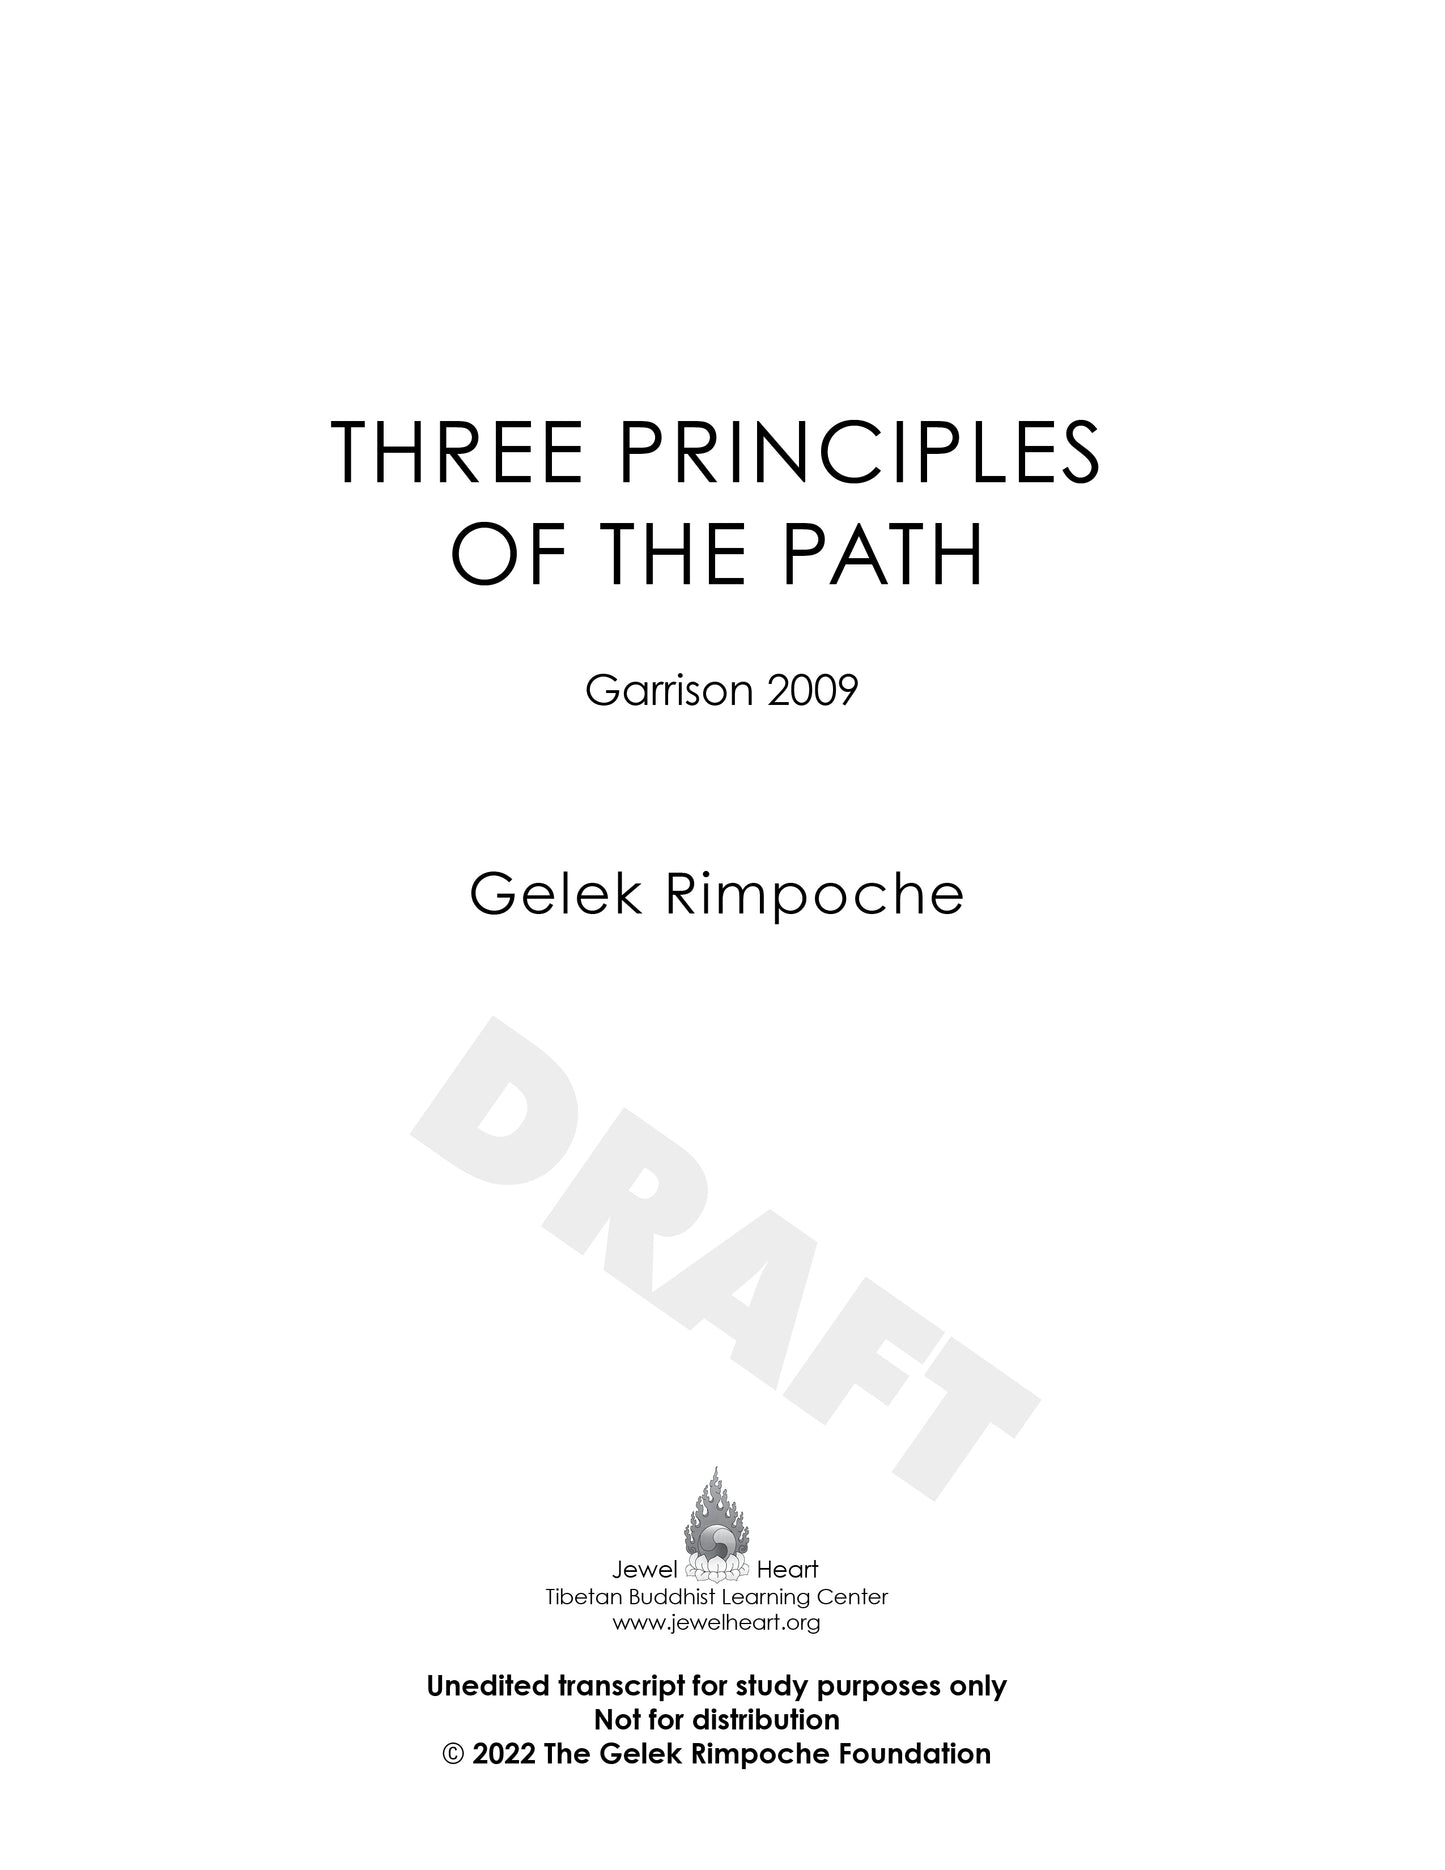 THREE PRINCIPLES OF THE PATH - Garrison 2009